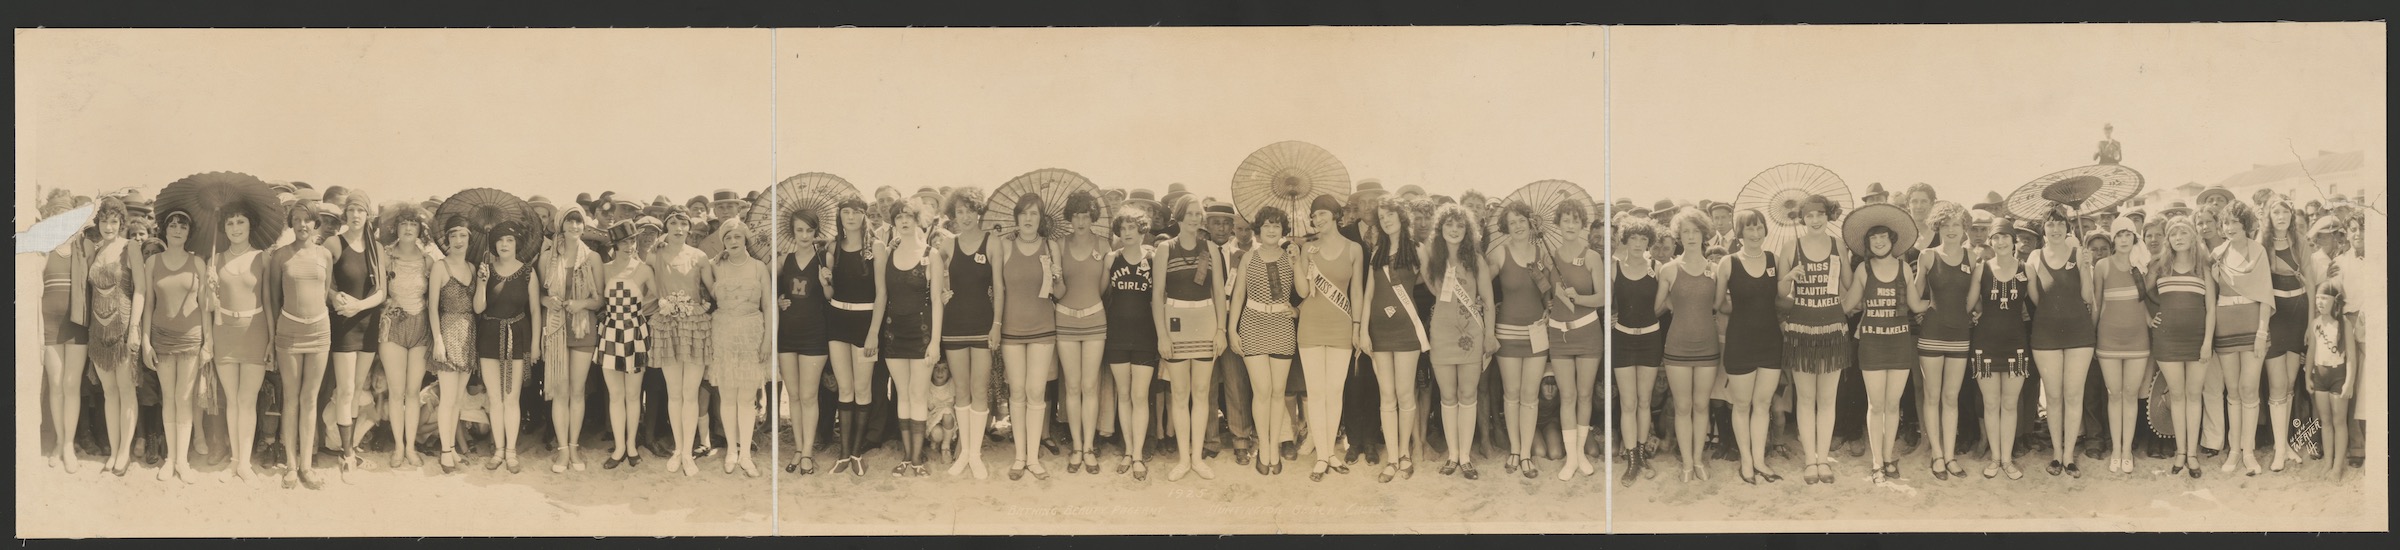 Bathing Beauty Pageant, 1925, Huntington Beach, Calif.